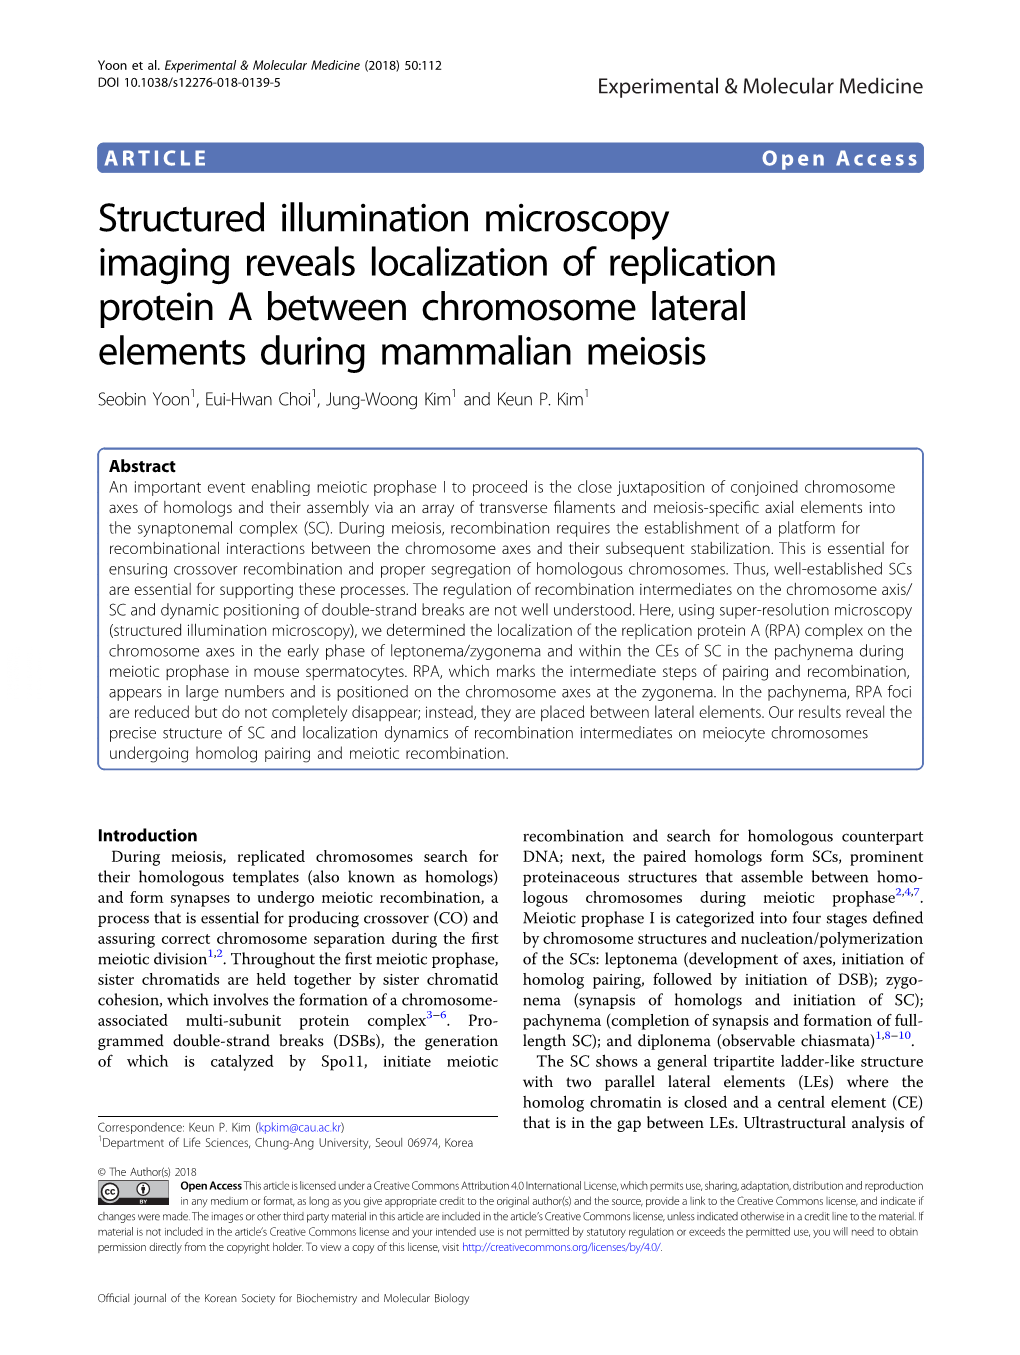 Structured Illumination Microscopy Imaging Reveals Localization Of